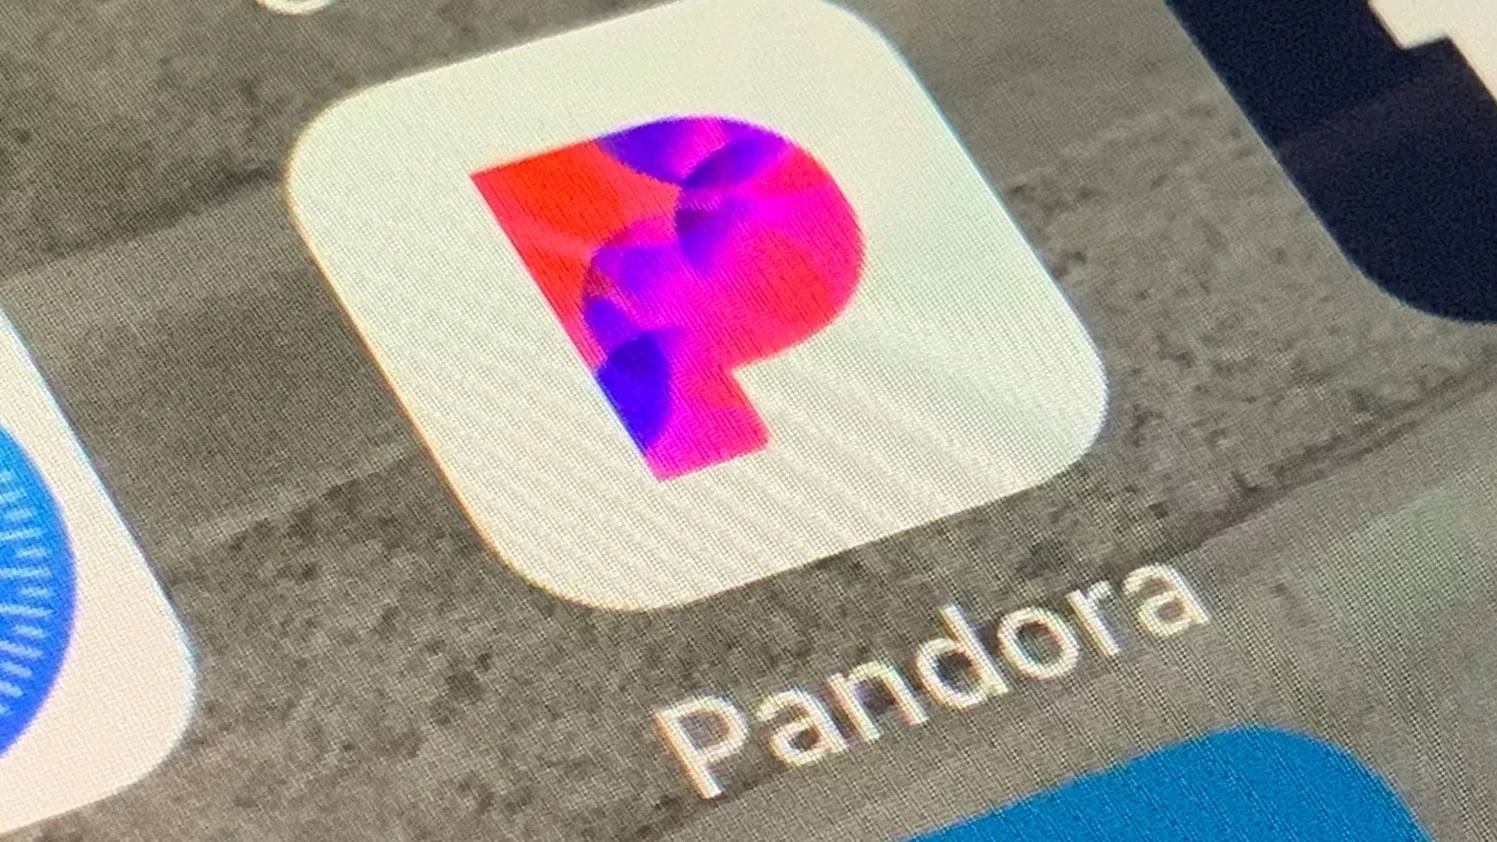 Pandora Apk Download 2022 Latest Version